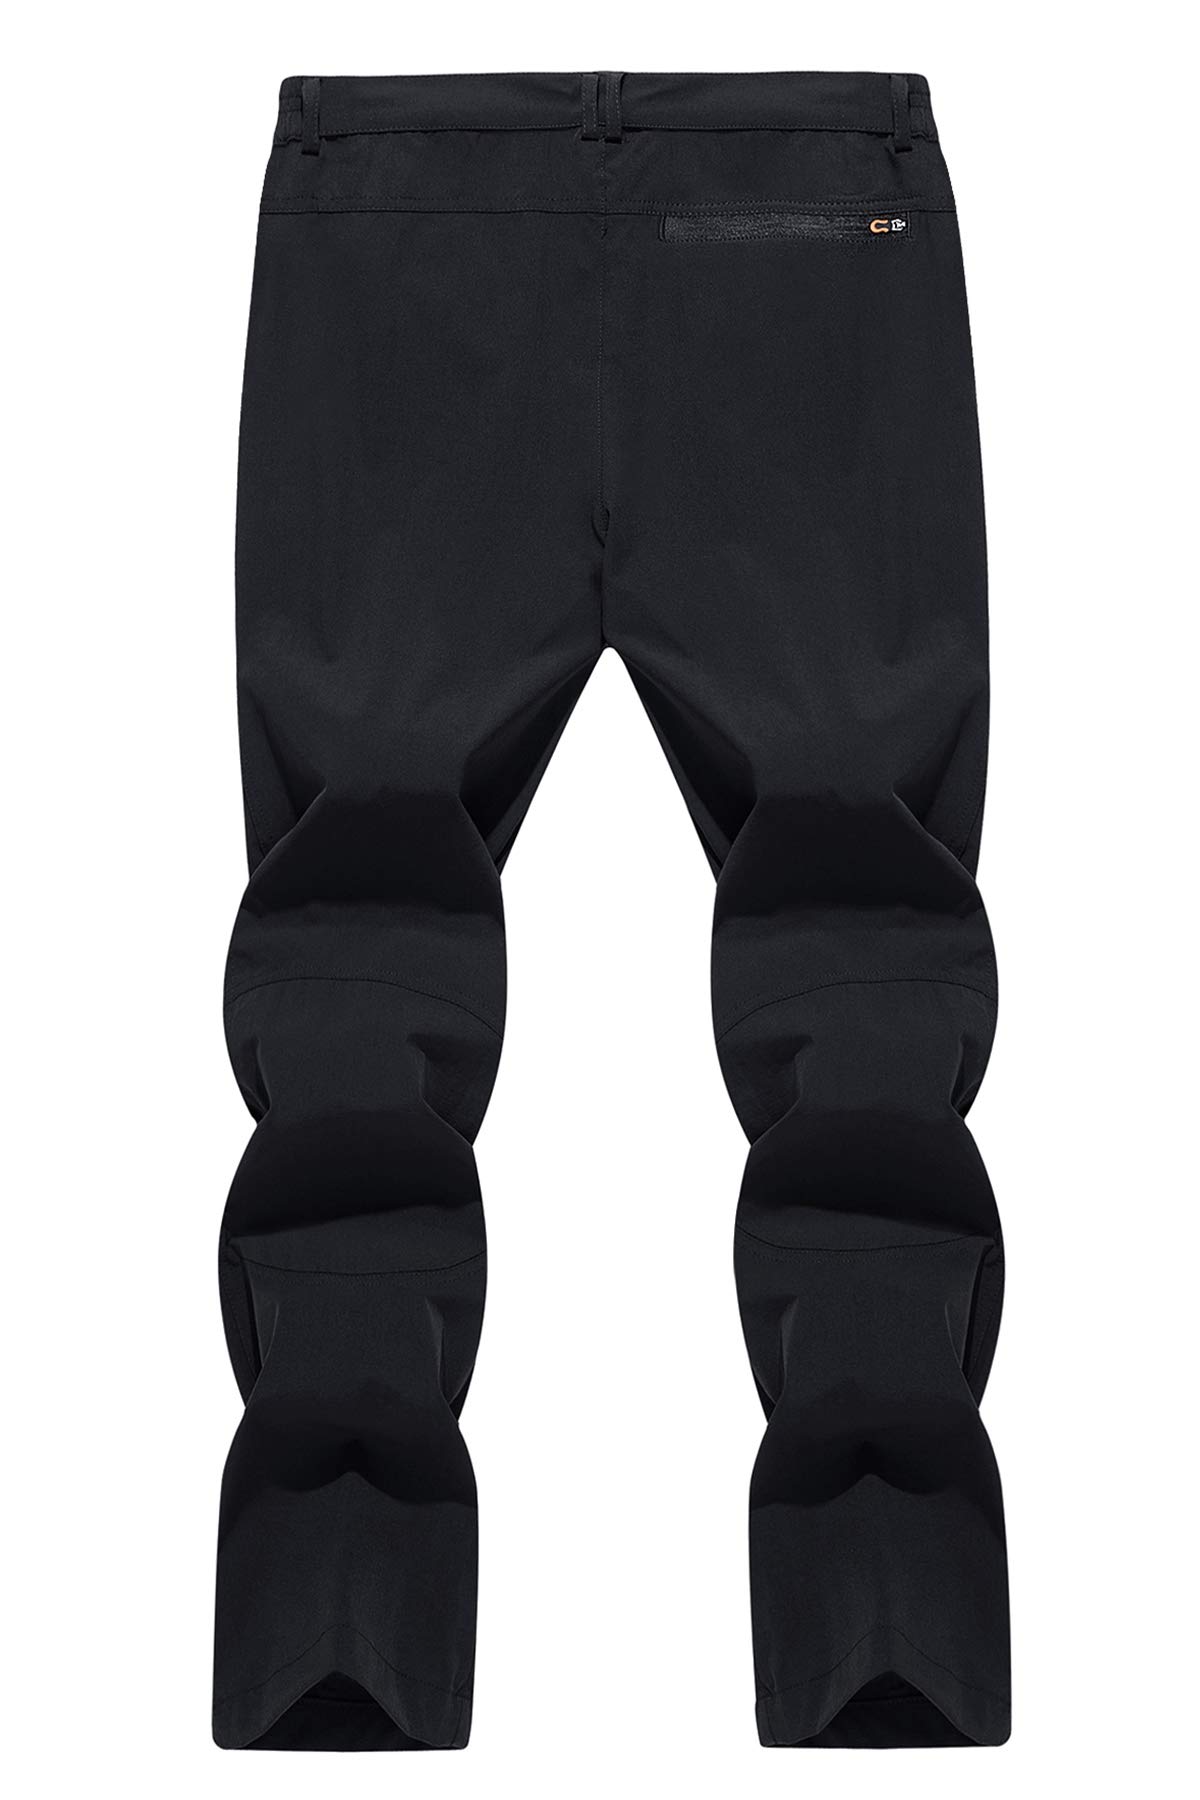 TACVASEN Men's Hiking Pants Quick Dry Fishing Camping Travel Pants Reinforced Knees Black, 30